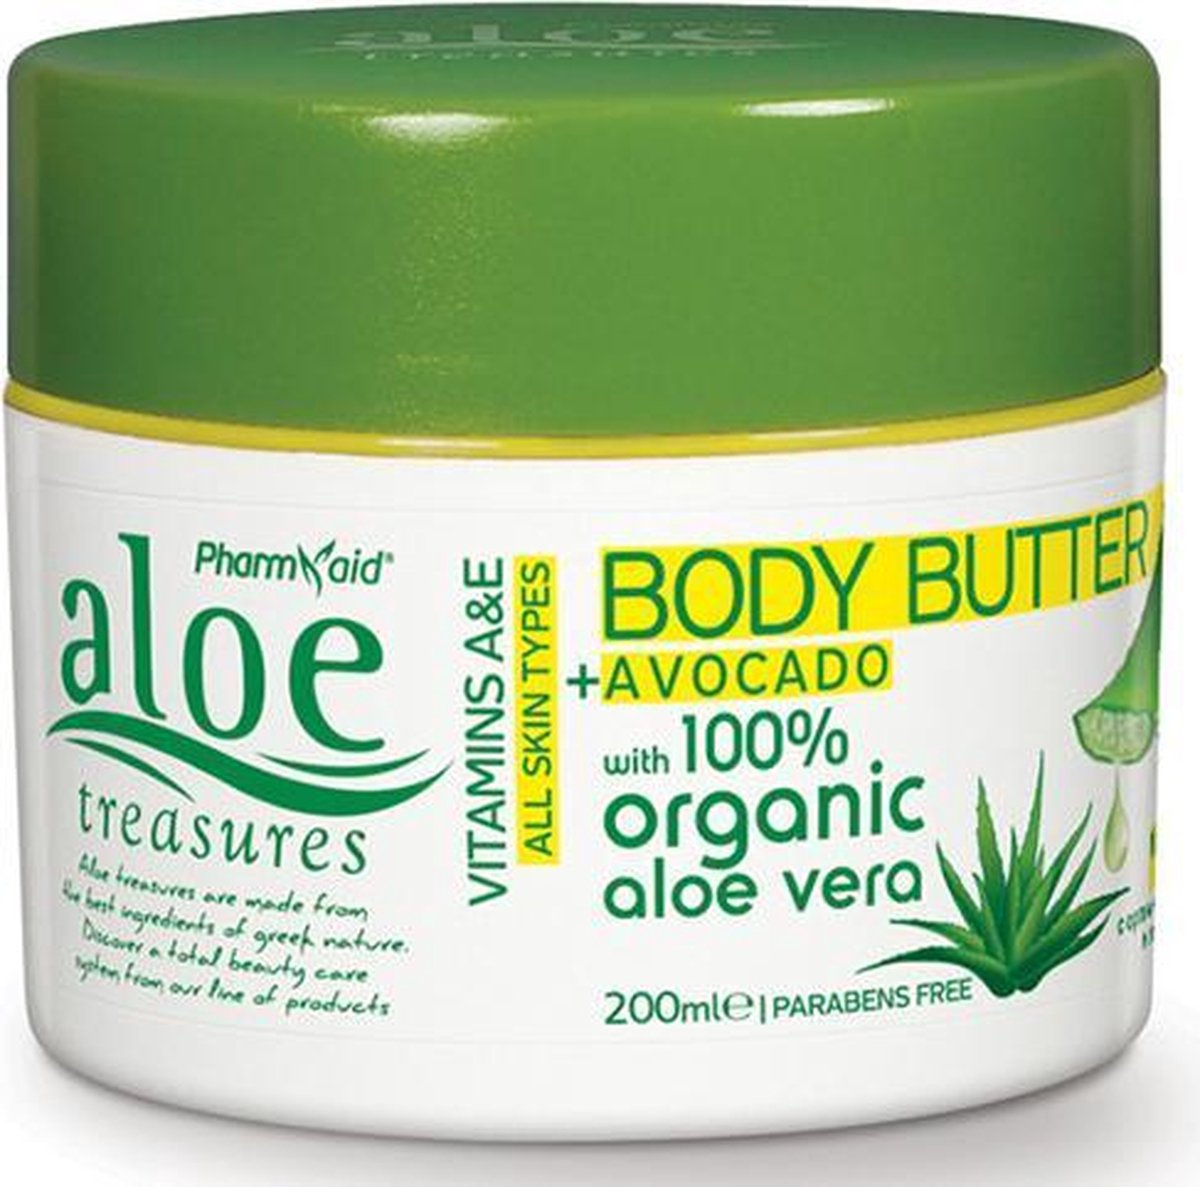 Pharmaid Aloe Treasures Body Butter Avocado 200ml | Shea BodyButters Moisturizer | Natural Skincare